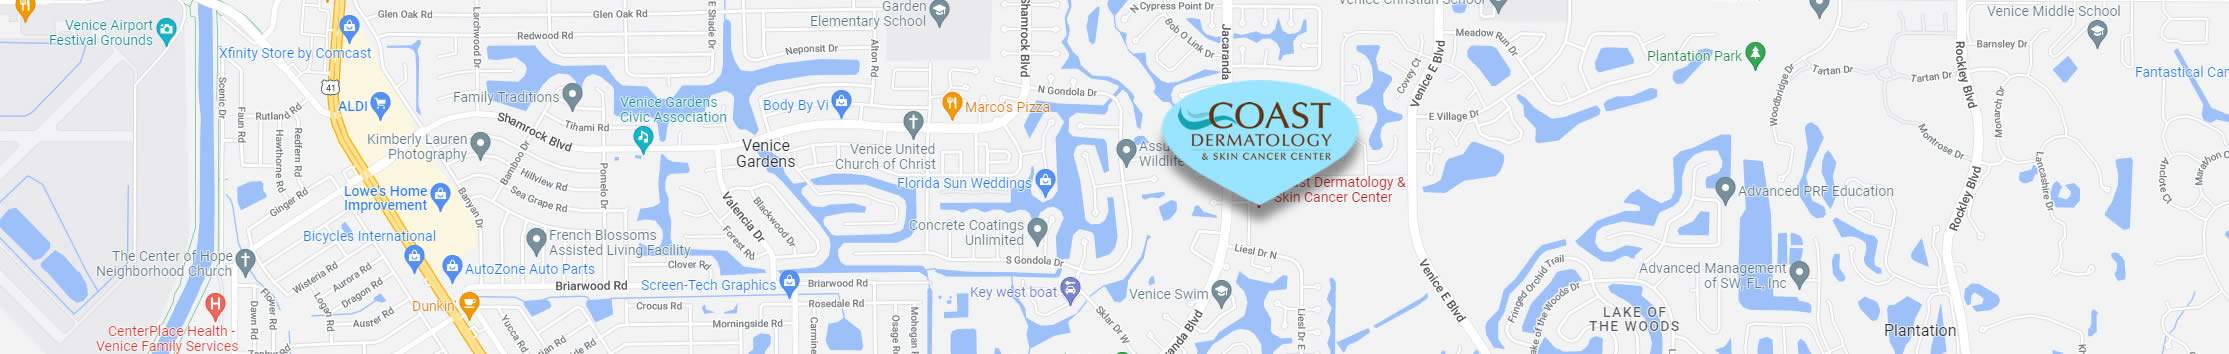 coast dermatolgy map location